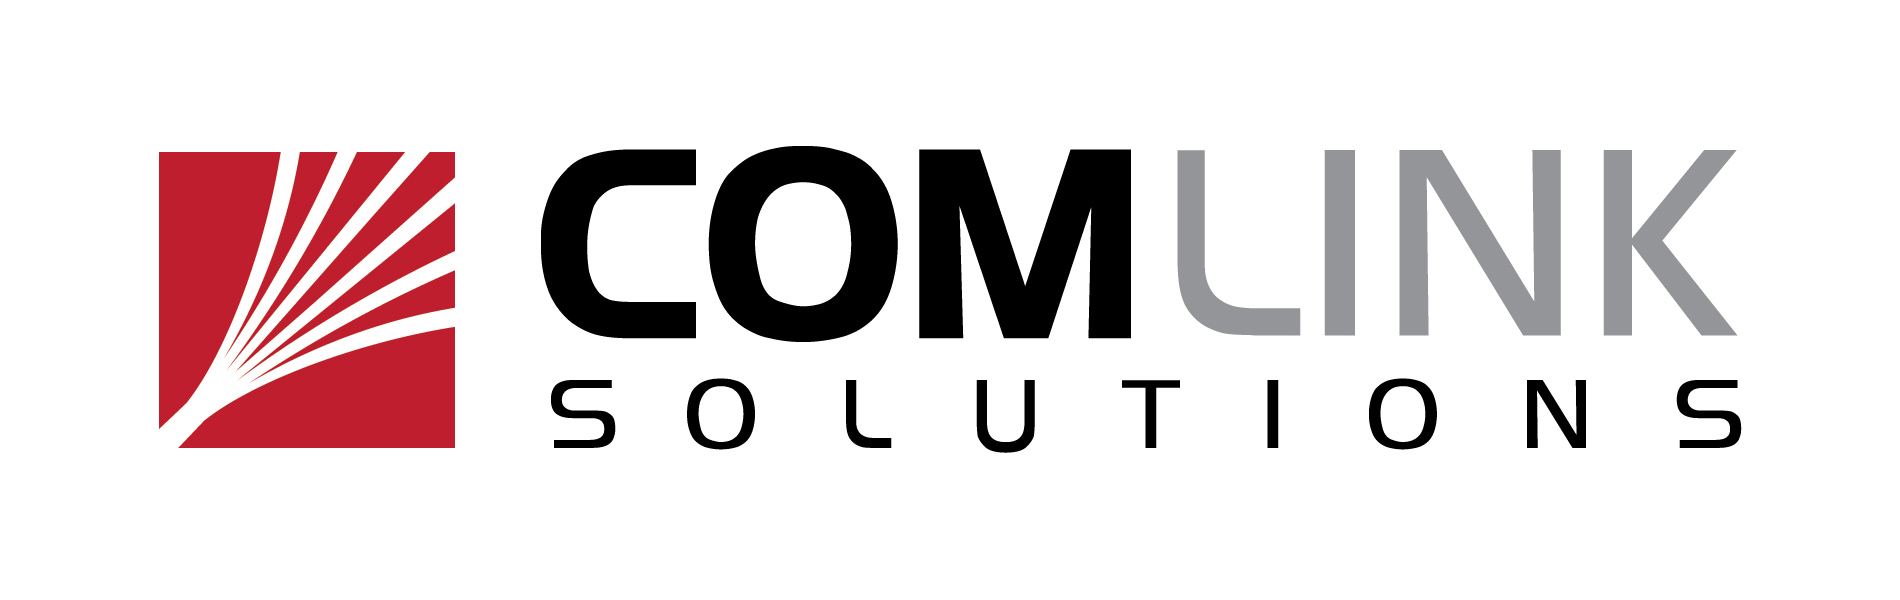 Comlink Solutions Company Logo